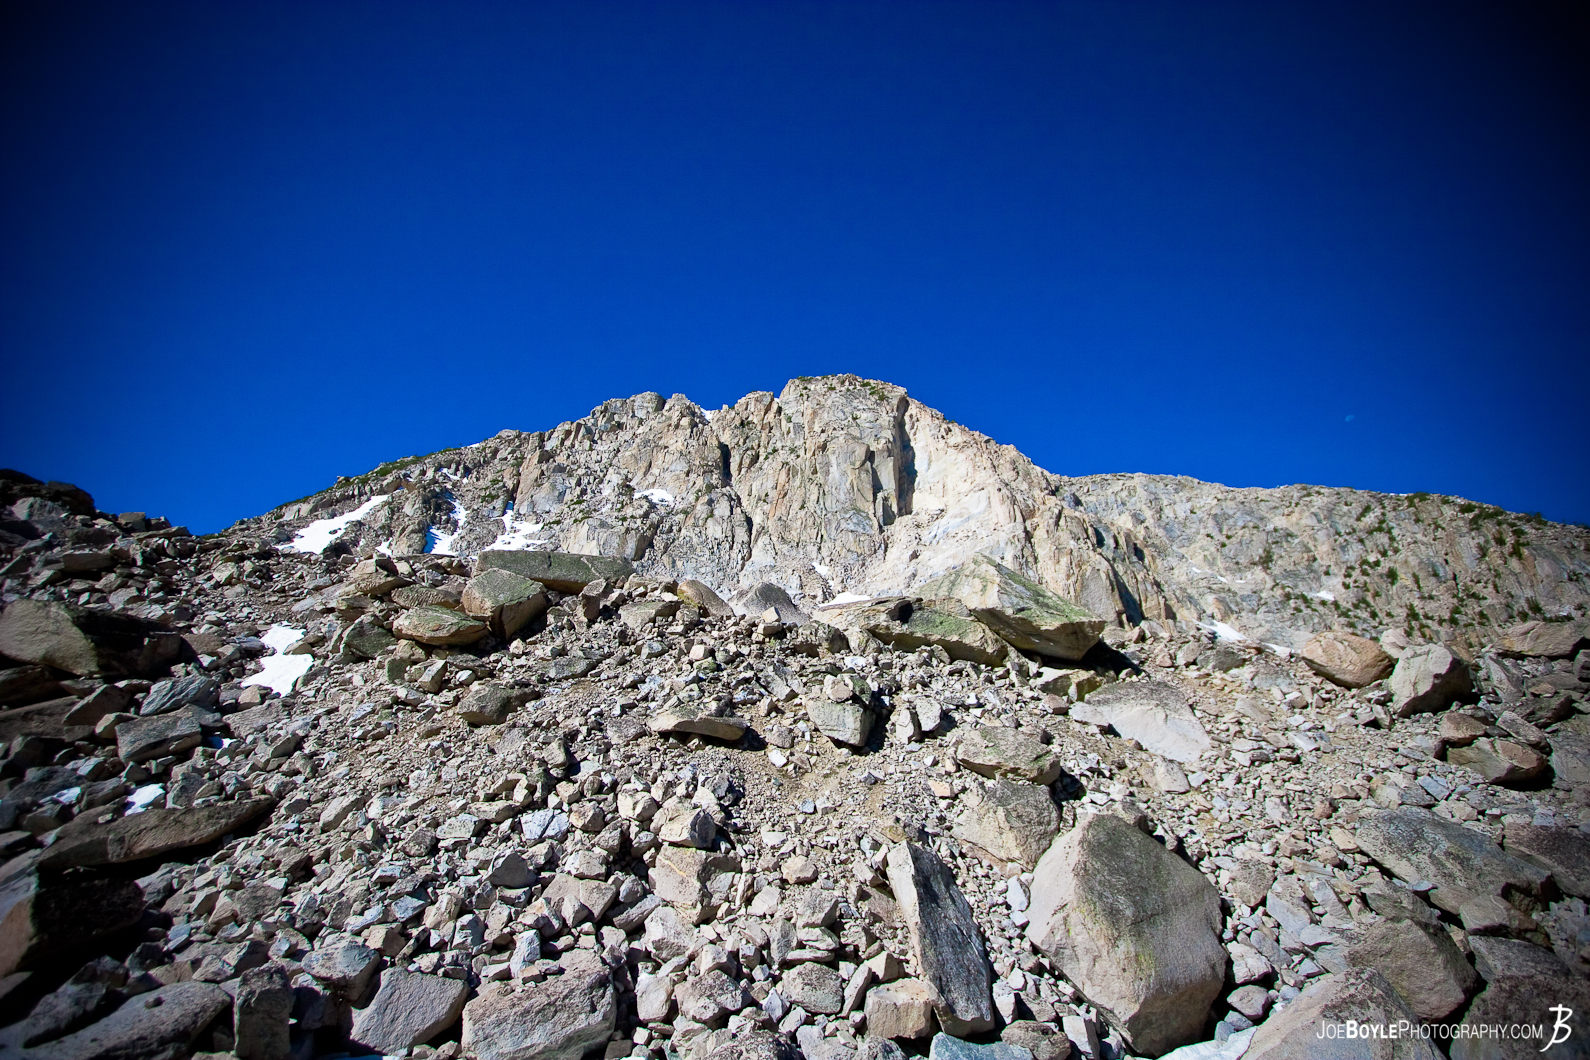  I took the image of this mountain while hiking the John Muir Trail. 